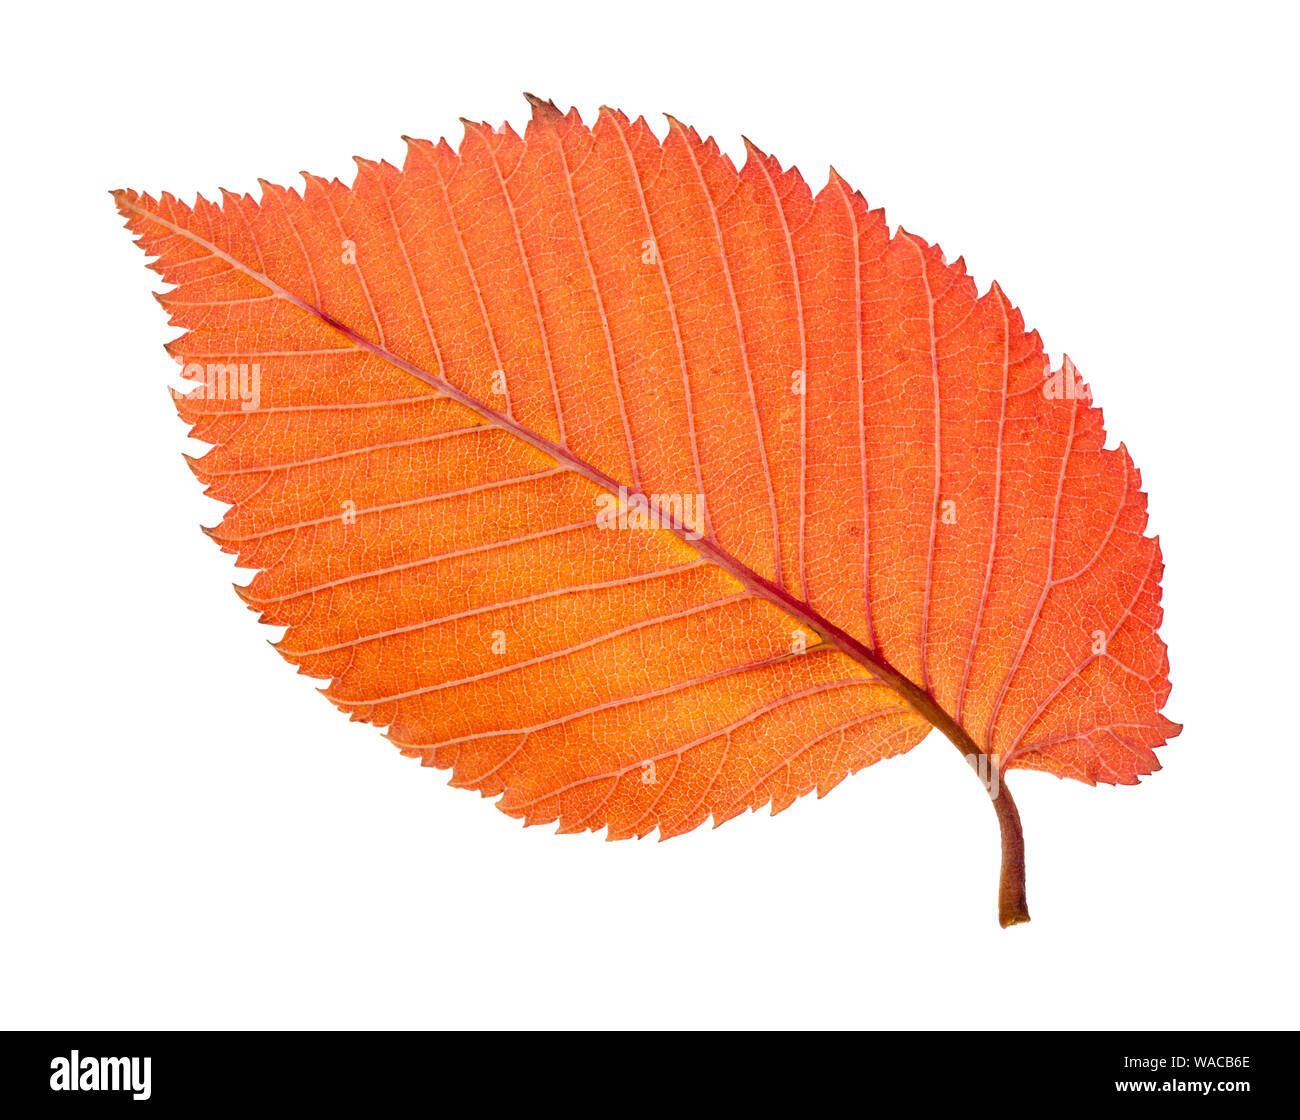 back side of fallen orange leaf of elm tree cutout on white background Stock Photo